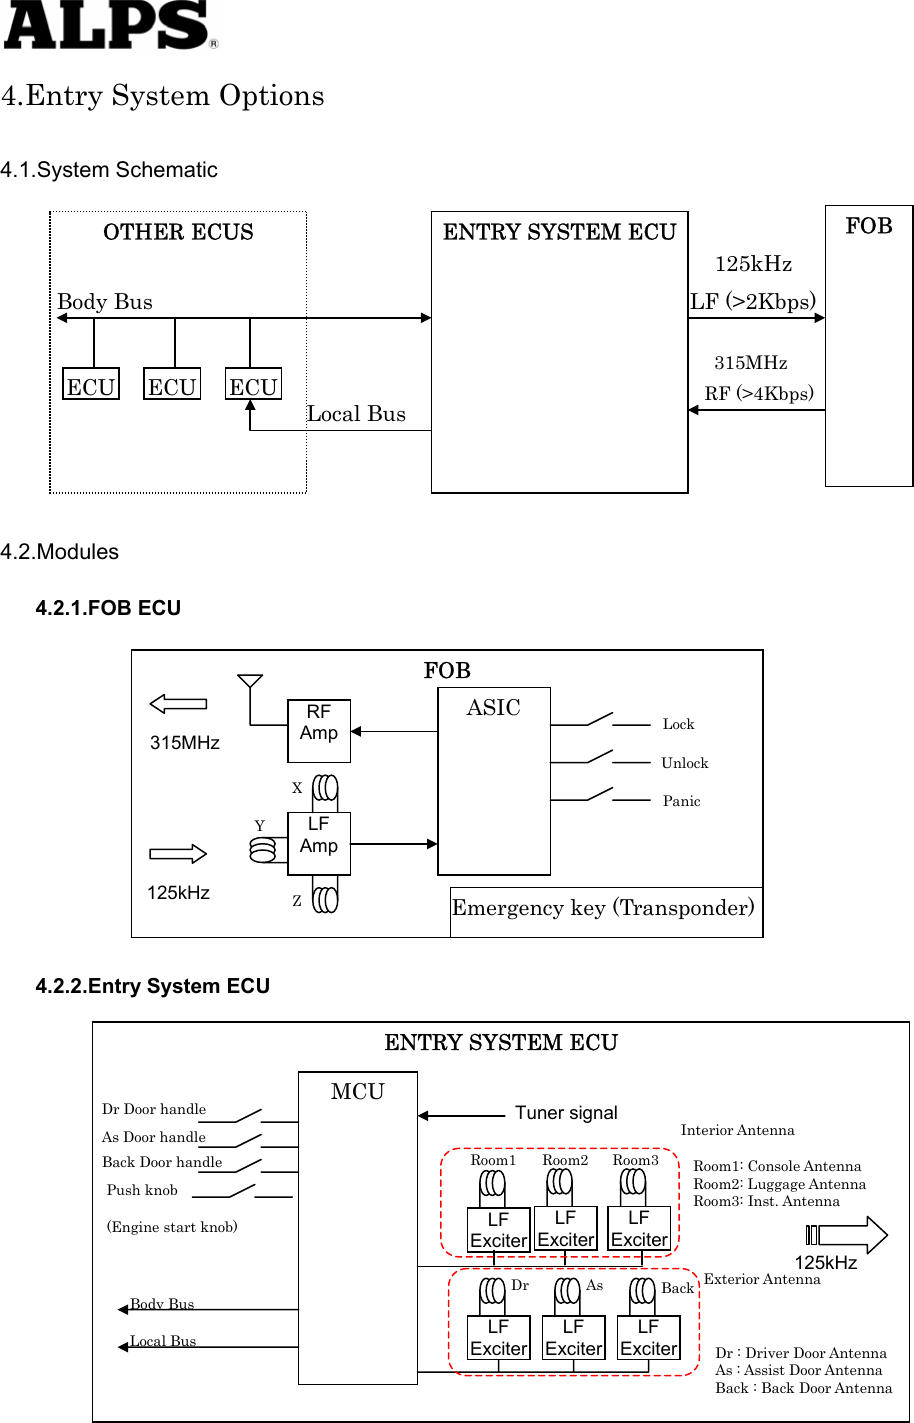   4.Entry System Options  4.1.System Schematic                 4.2.Modules 4.2.1.FOB ECU                4.2.2.Entry System ECU                     OTHER ECUS LF (&gt;2Kbps) Local Bus ECUECUECUBody Bus ENTRY SYSTEM ECU  FOB 125kHz RF (&gt;4Kbps) 315MHz FOB RF Amp LF Amp ASIC Z X Y Lock   Unlock   Panic Emergency key (Transponder) 125kHz 315MHz ENTRY SYSTEM ECU MCU Dr Door handle As Door handle Back Door handle Push knob (Engine start knob) Body Bus Local Bus LF ExciterLF ExciterLF ExciterLF ExciterRoom1 Dr As Back 125kHz Dr : Driver Door Antenna As : Assist Door Antenna Back : Back Door Antenna Exterior Antenna Room1: Console Antenna   Room2: Luggage Antenna   Room3: Inst. Antenna Interior Antenna LF ExciterLF ExciterRoom2 Room3 Tuner signal 